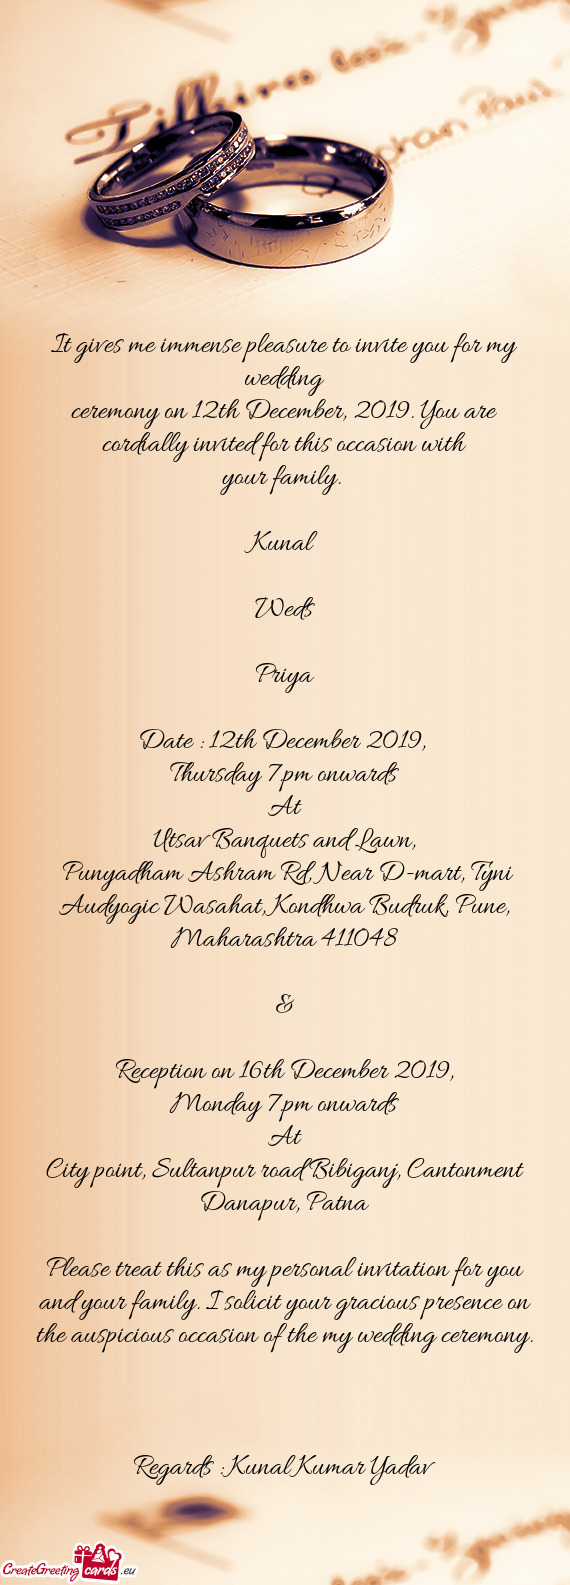 Reception on 16th December 2019